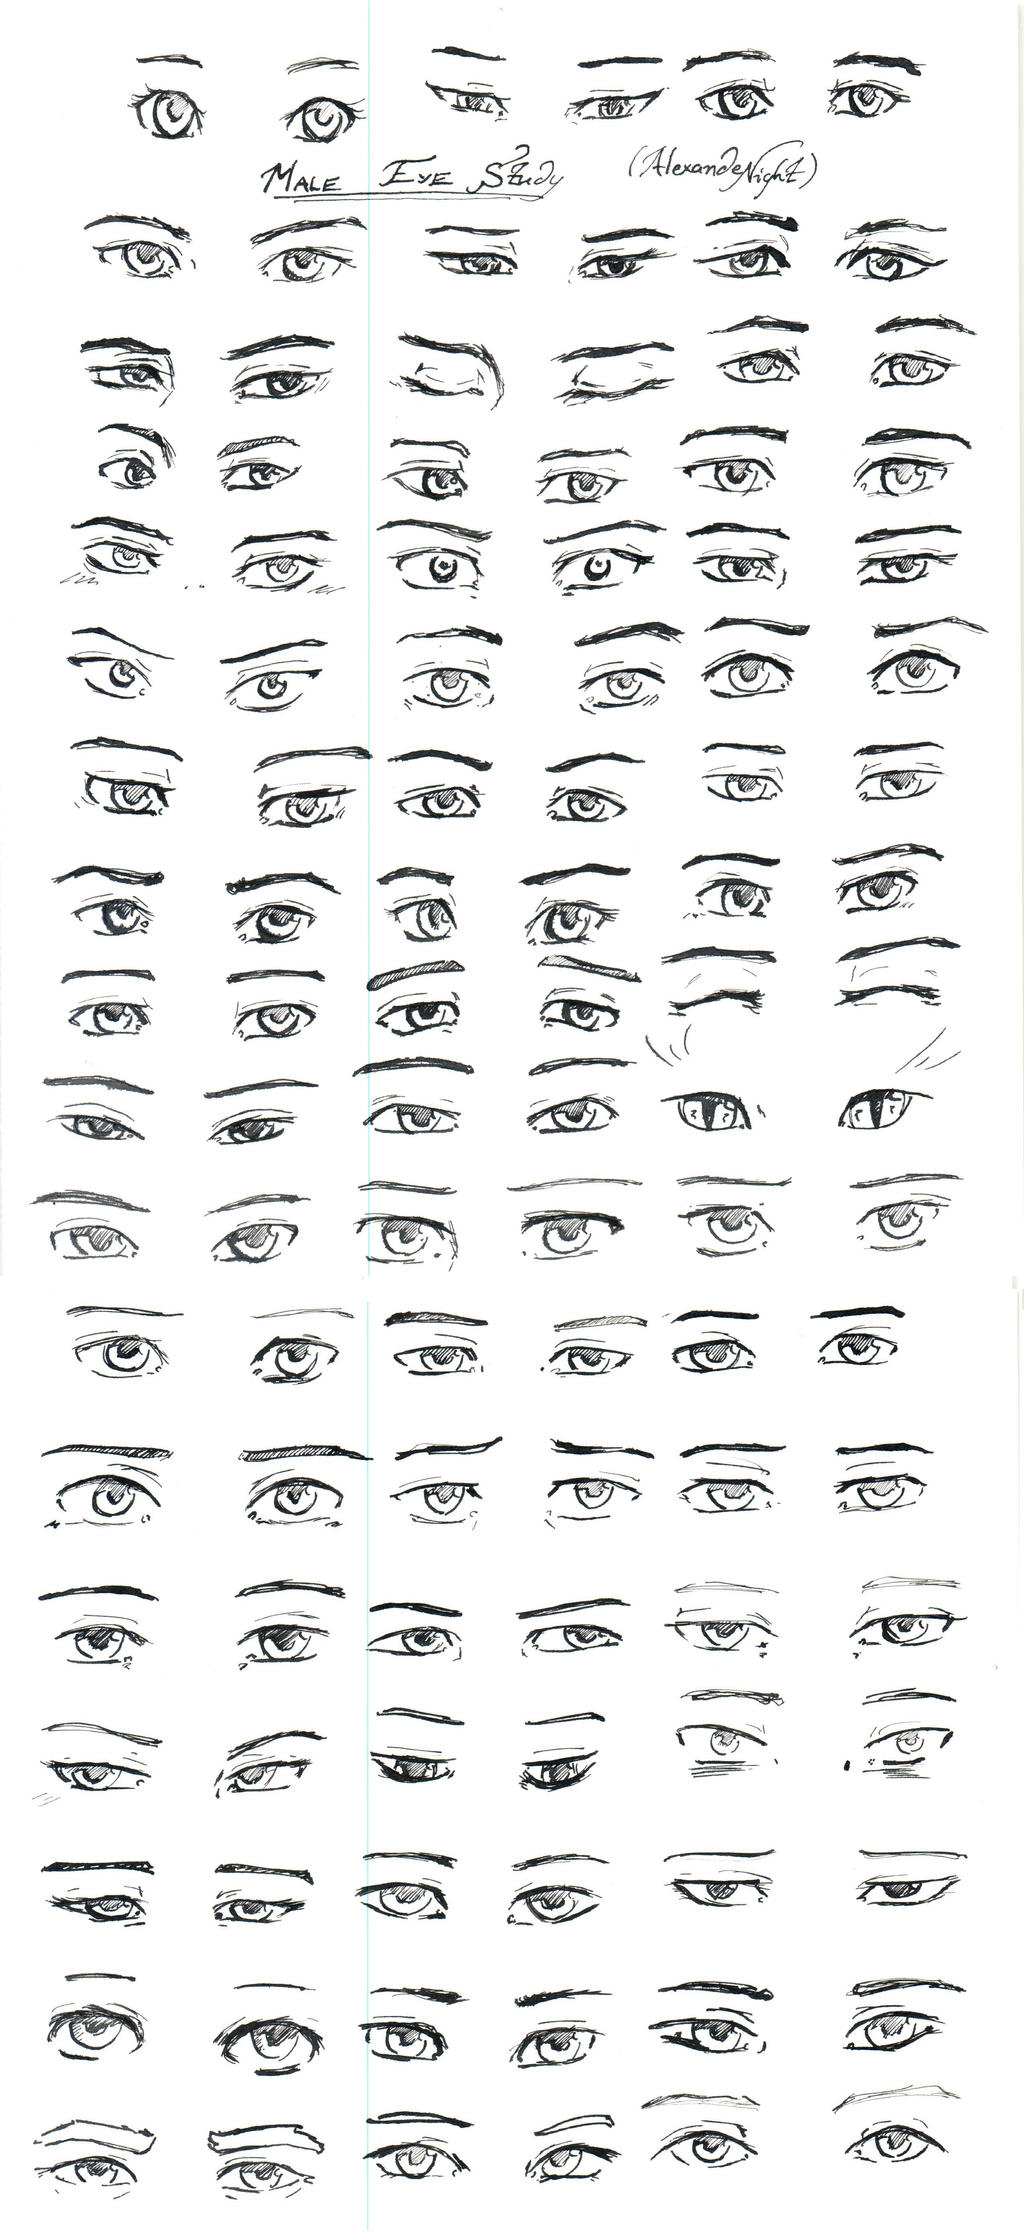 Male Anime Eyes Study by AlexandeNight on DeviantArt